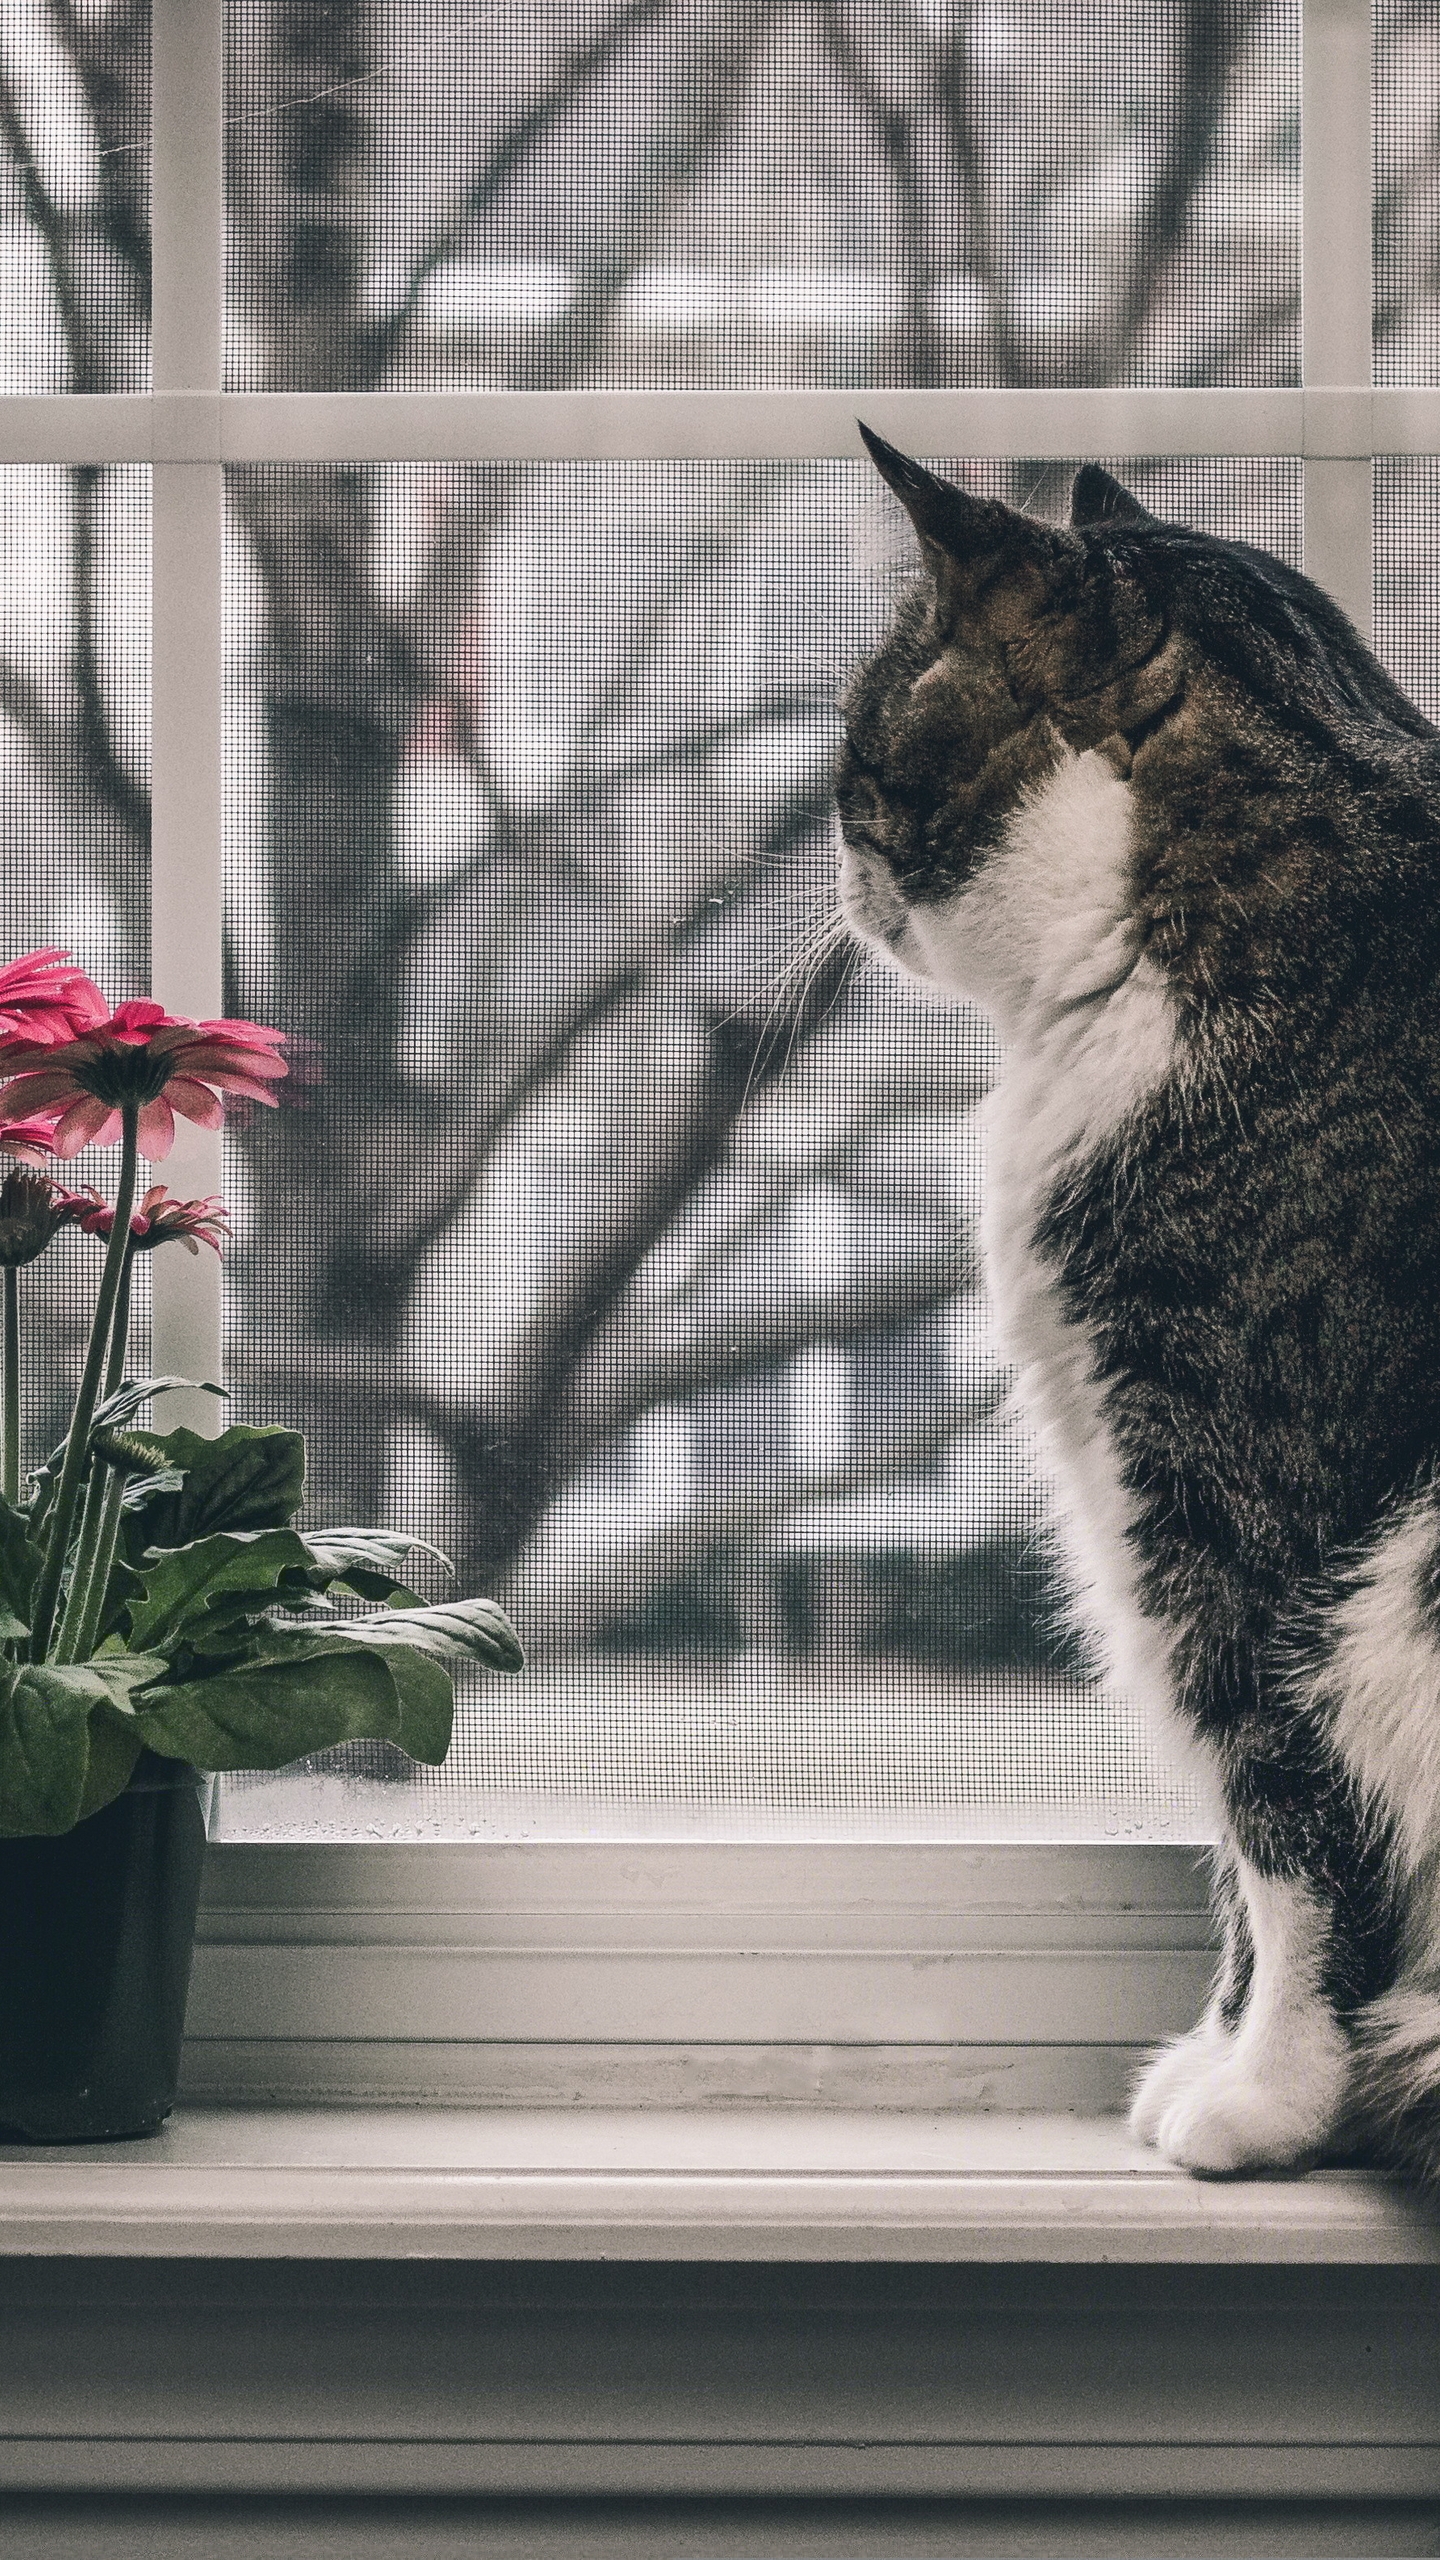 Image: Cat, sitting, window sill, watching, window, flower